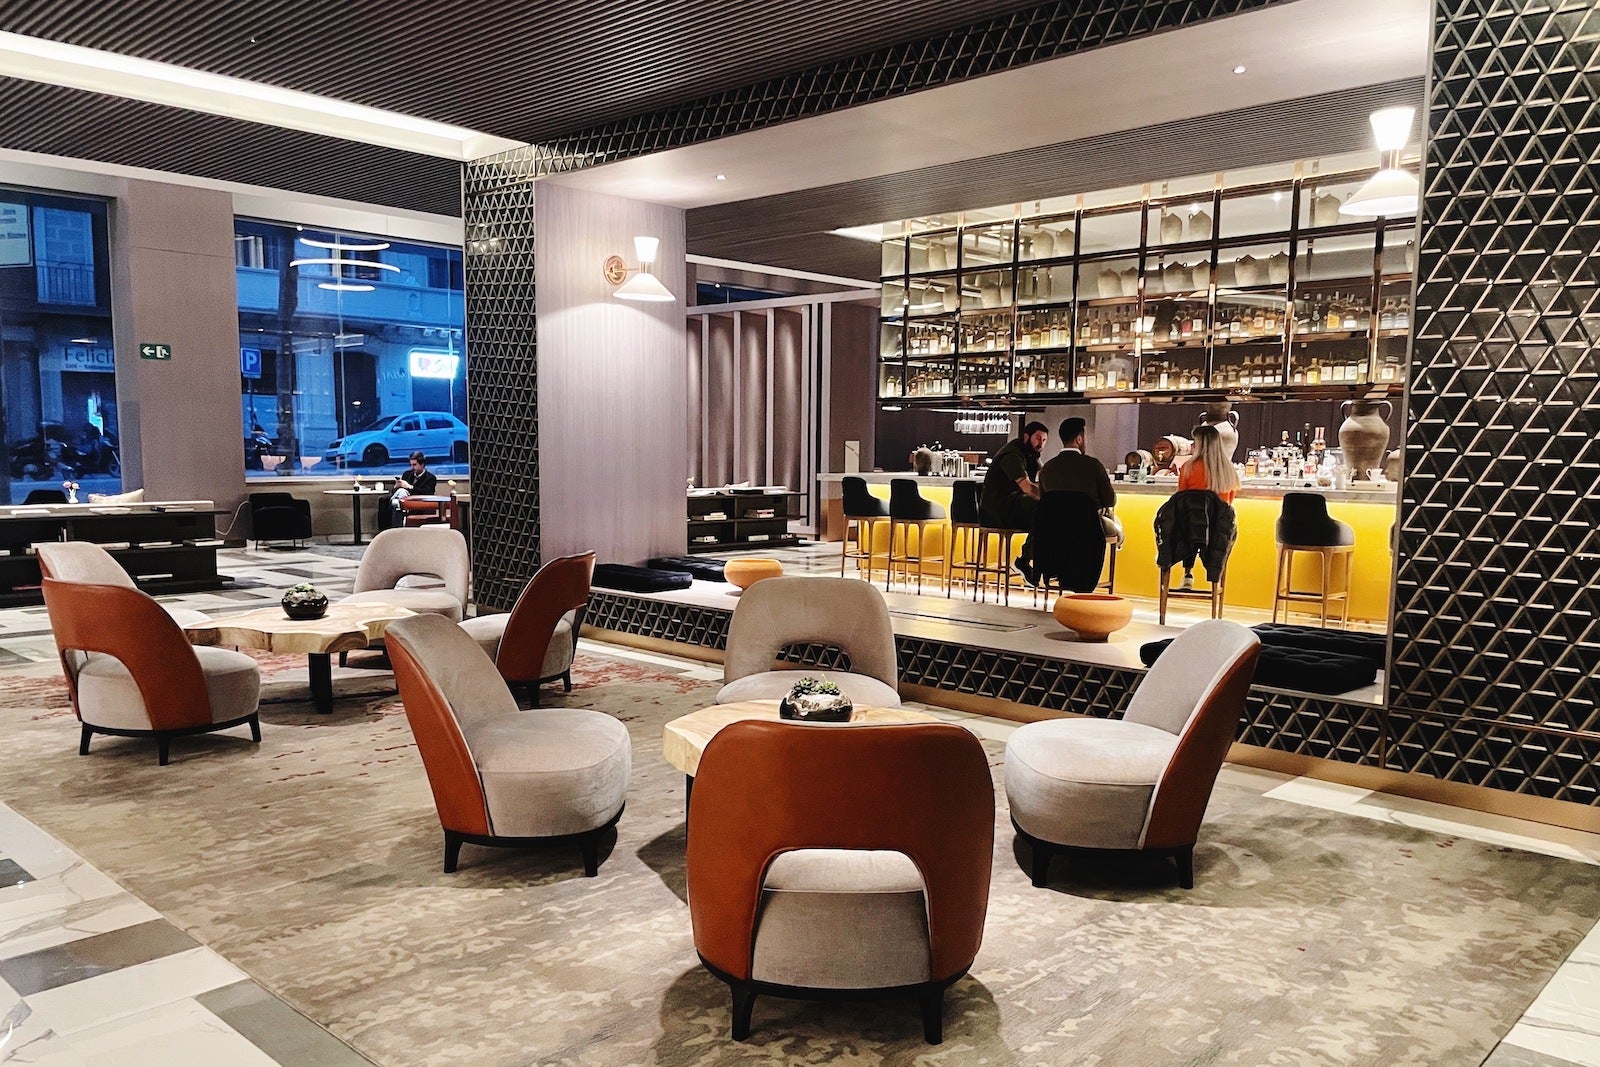 hotel lobby bar